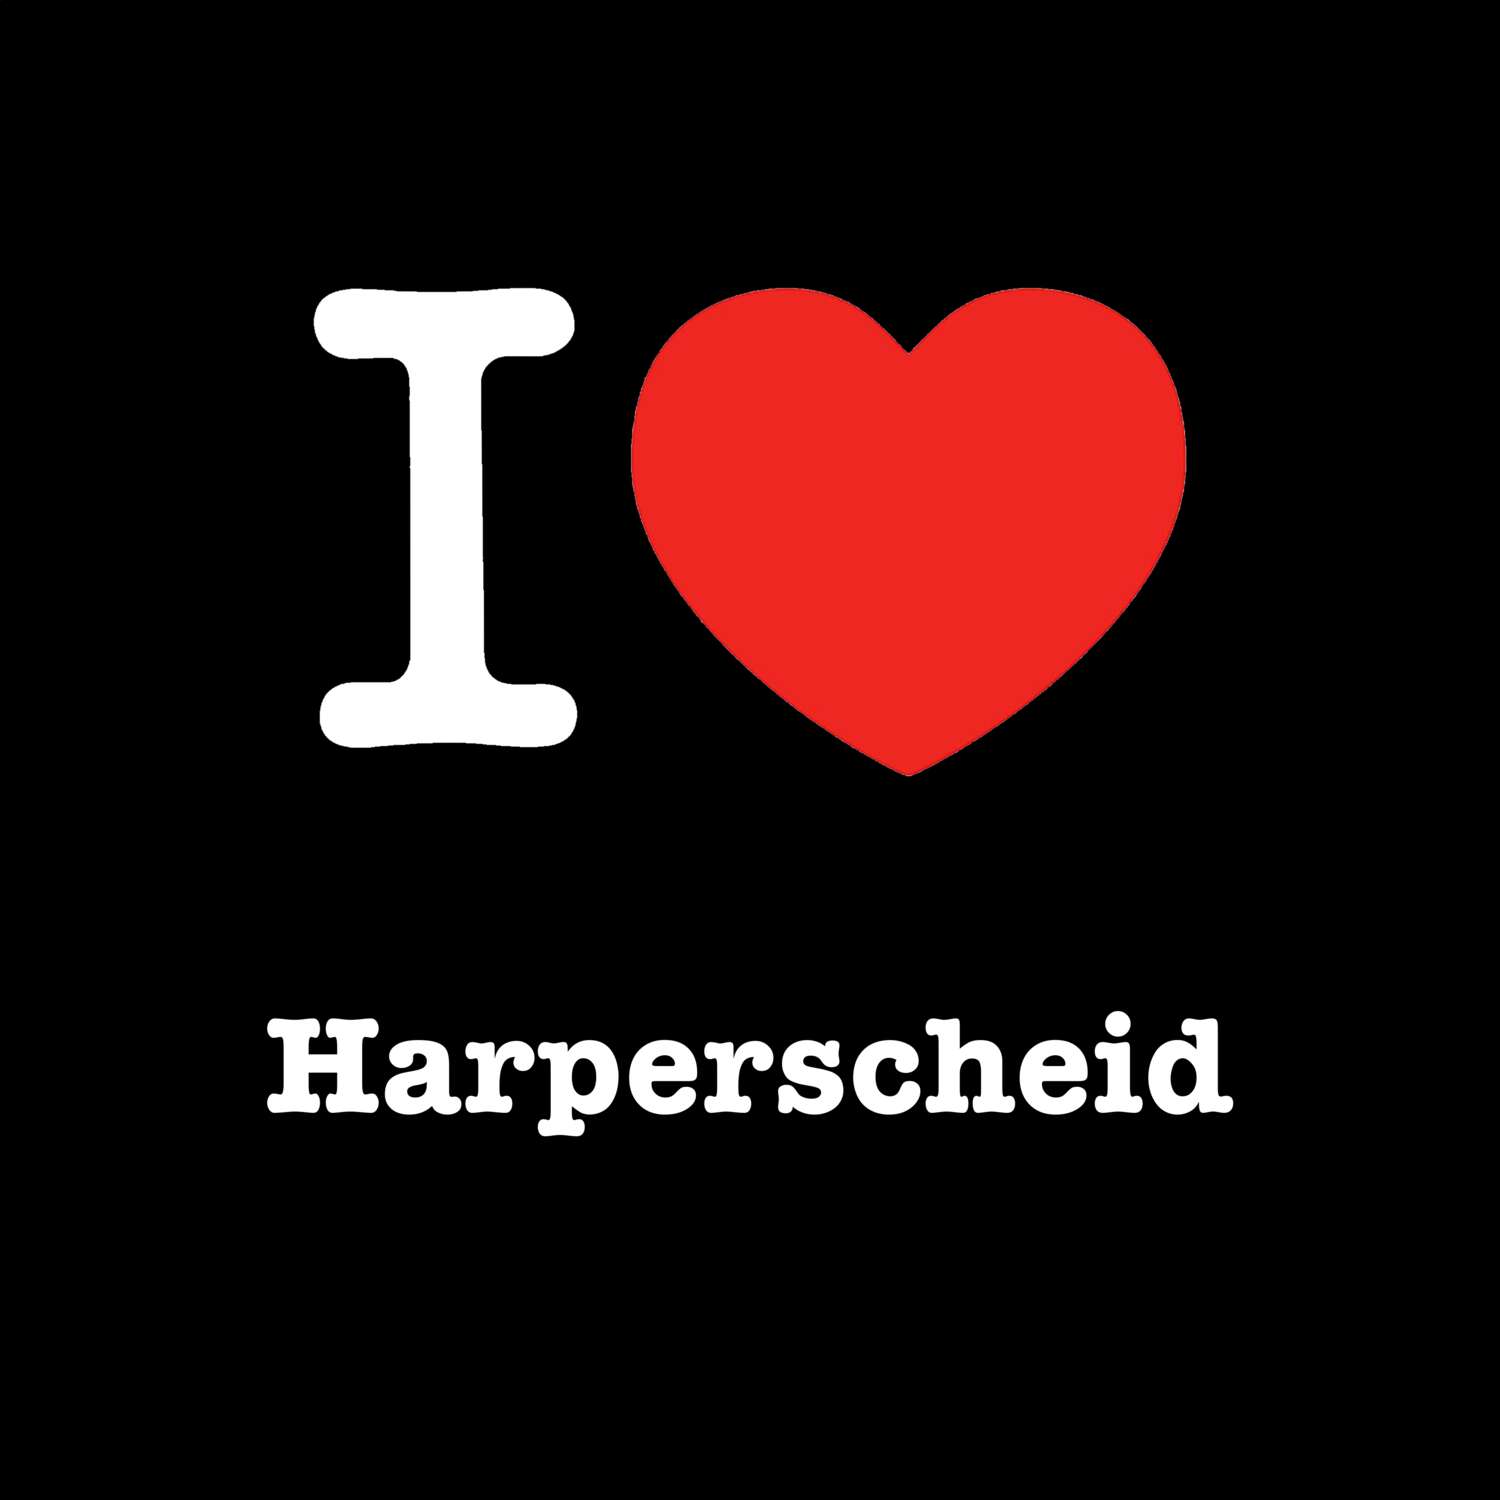 Harperscheid T-Shirt »I love«